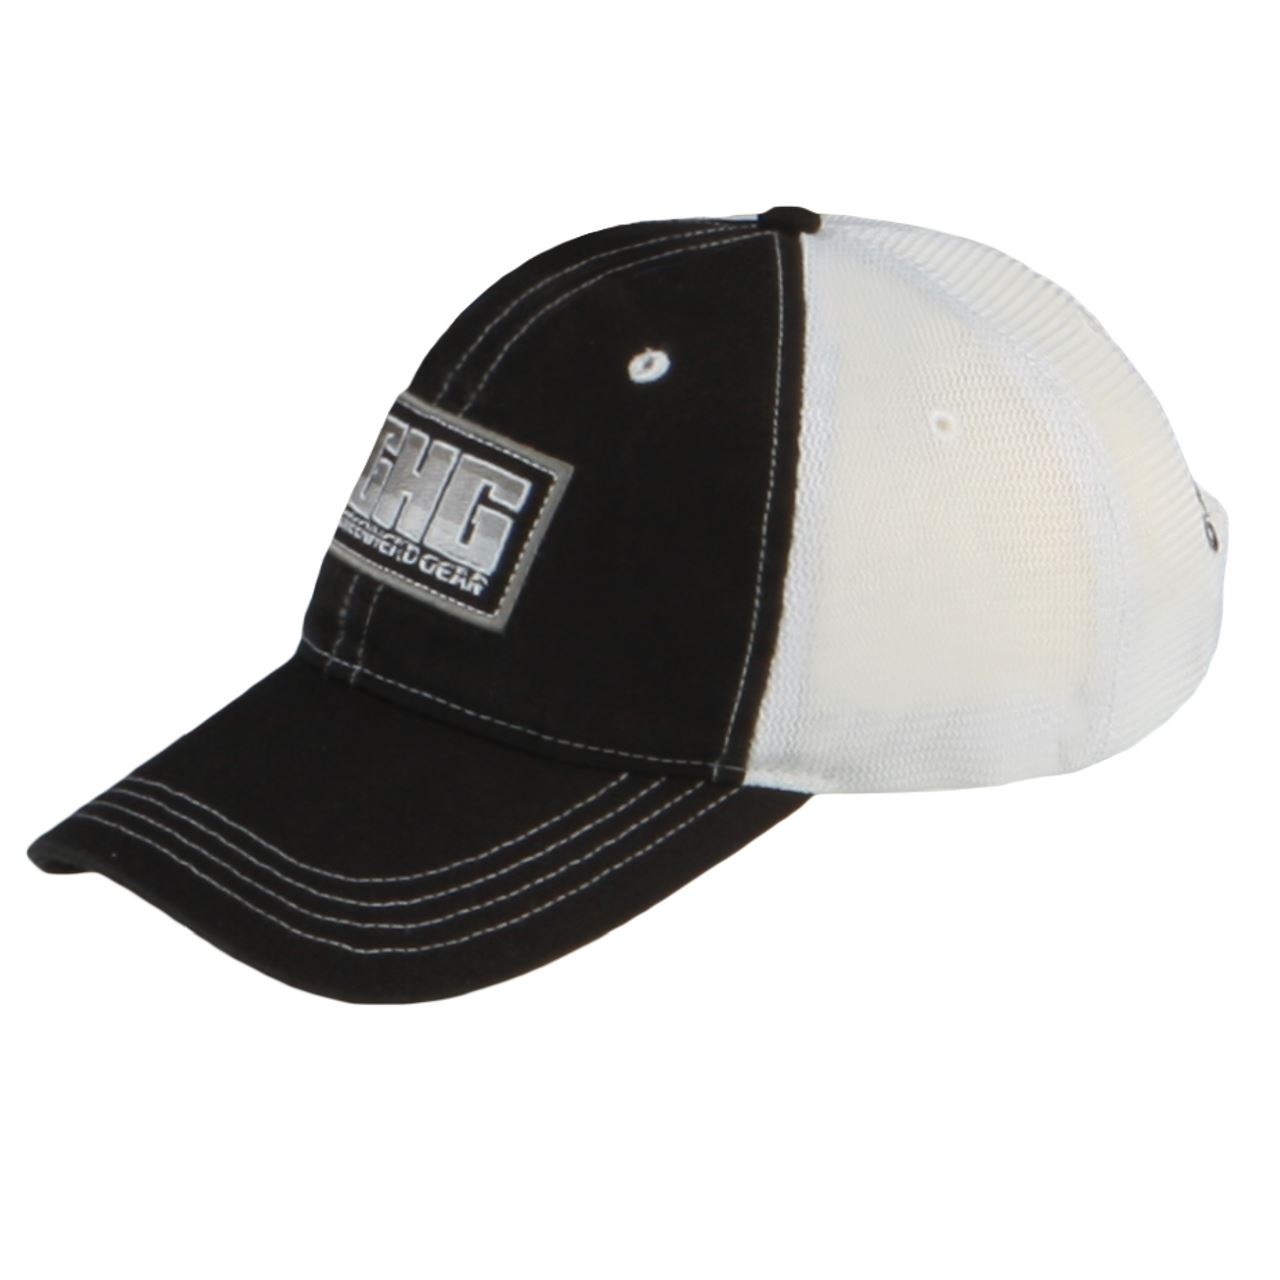 AVERY GREENHEAD GEAR GHG LOGO MESH BACK TRUCKER HAT BALL CAP BLACK & WHITE